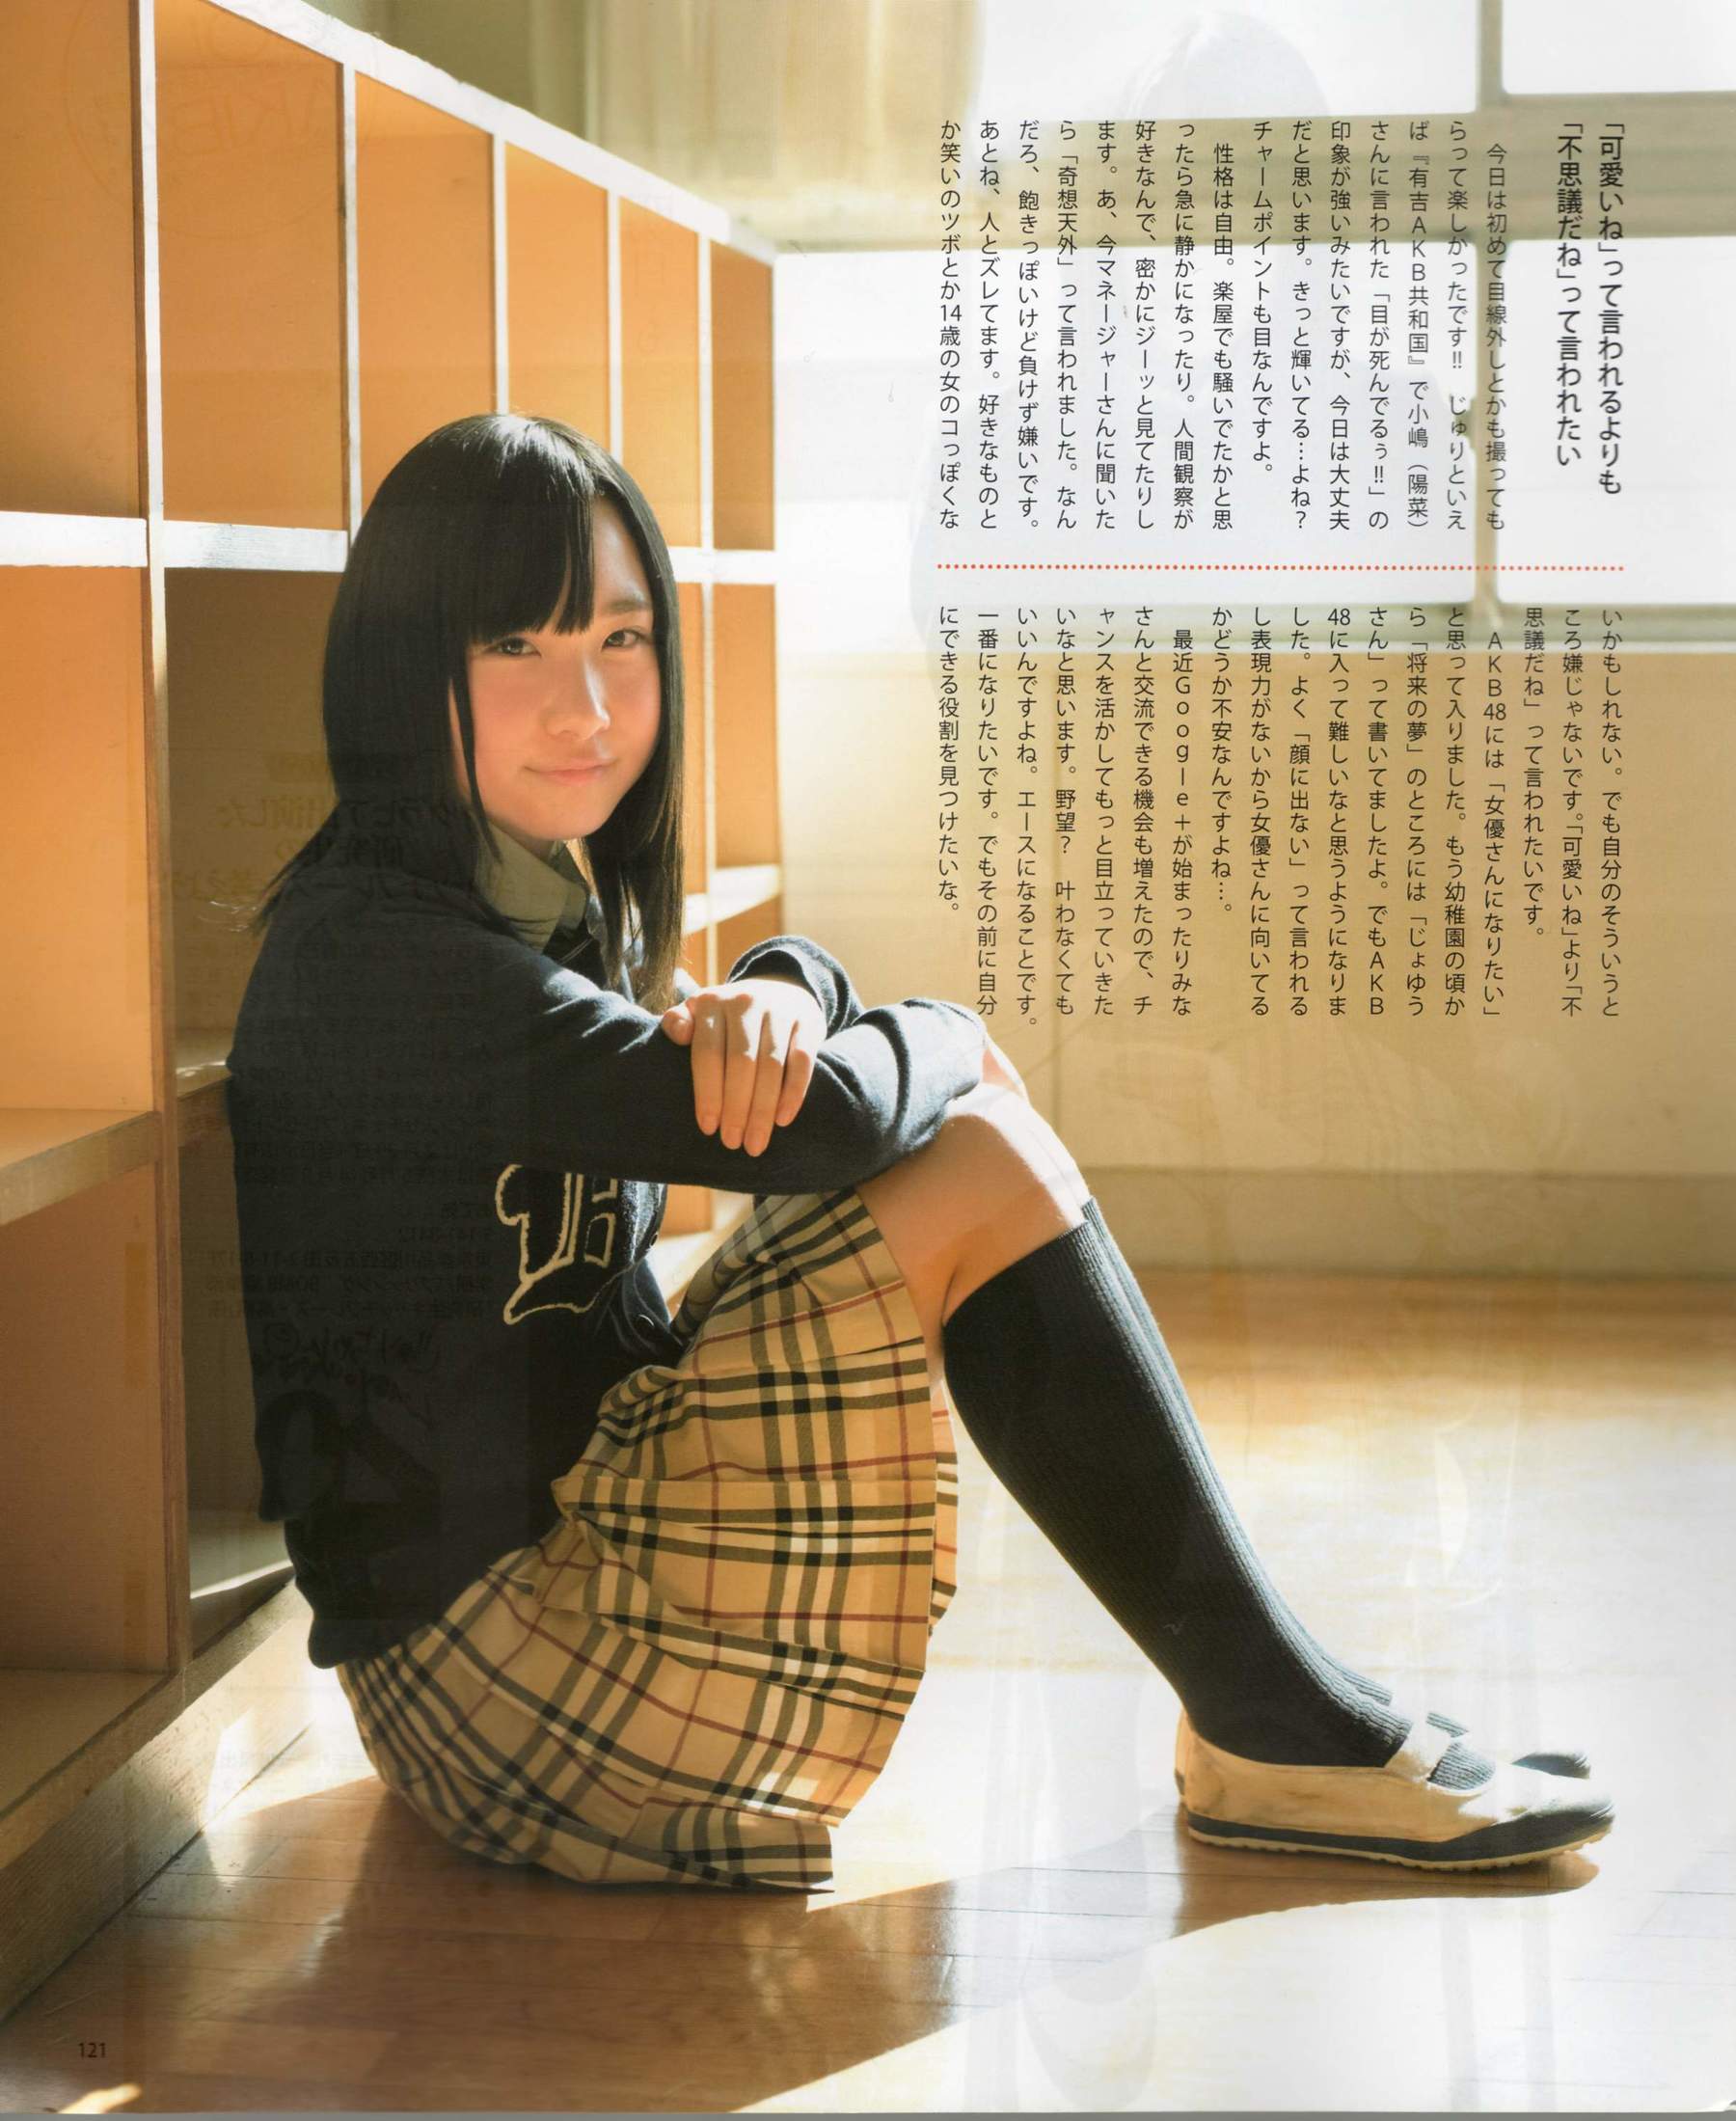 [Bomb Magazine] 2012年No.03 AKB48(Team4) NMB48 前田敦子 渡邊麻友 SUPER☆GiRLS 石原里美 剛力彩芽 篠崎愛